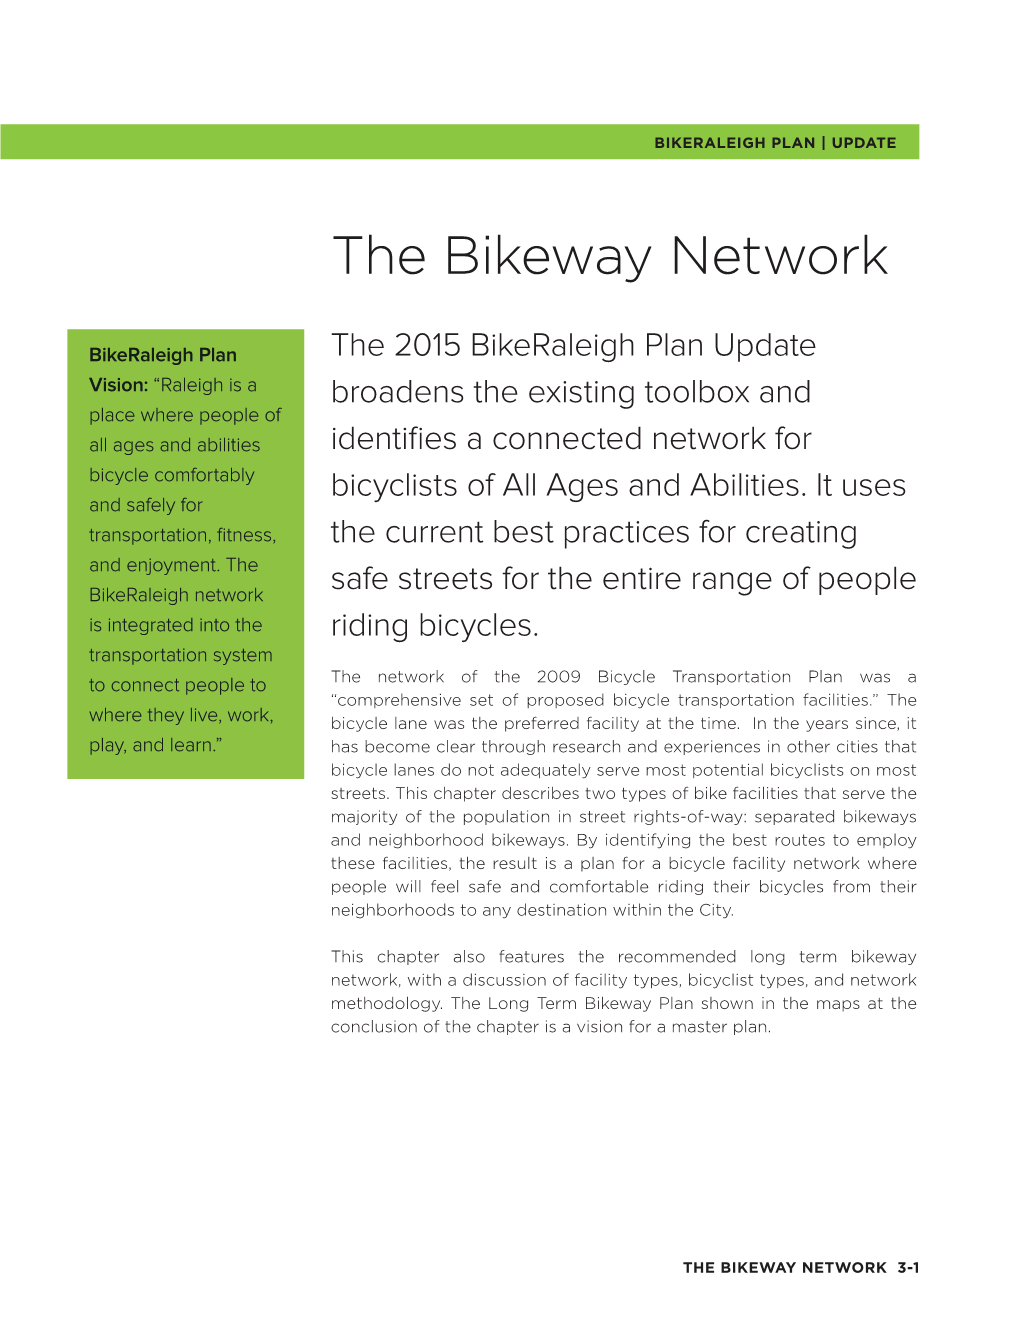 Bike Plan Network